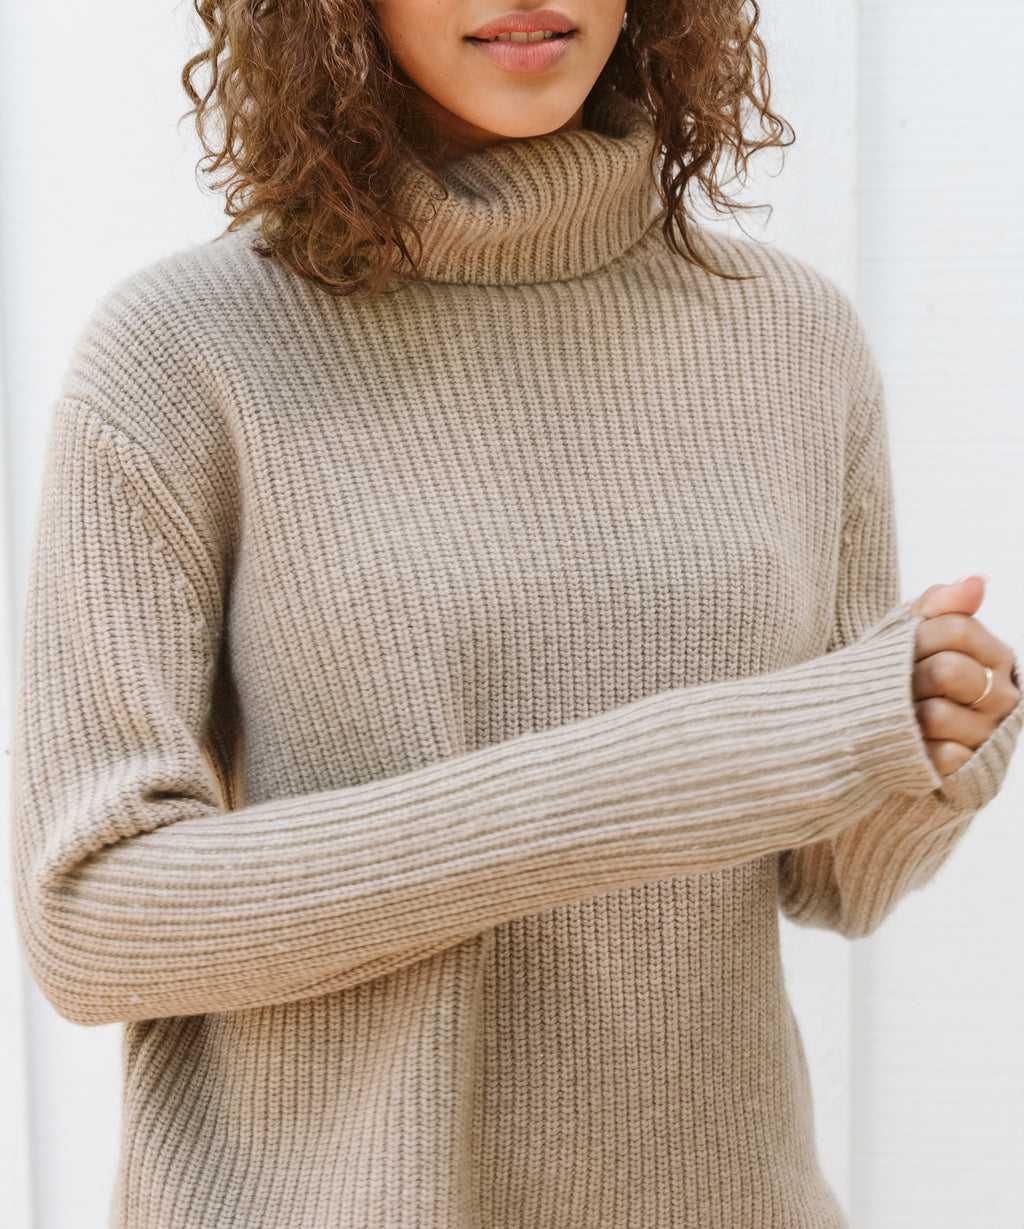 Jenni Kayne Women's Cashmere Turtleneck Top Size Medium